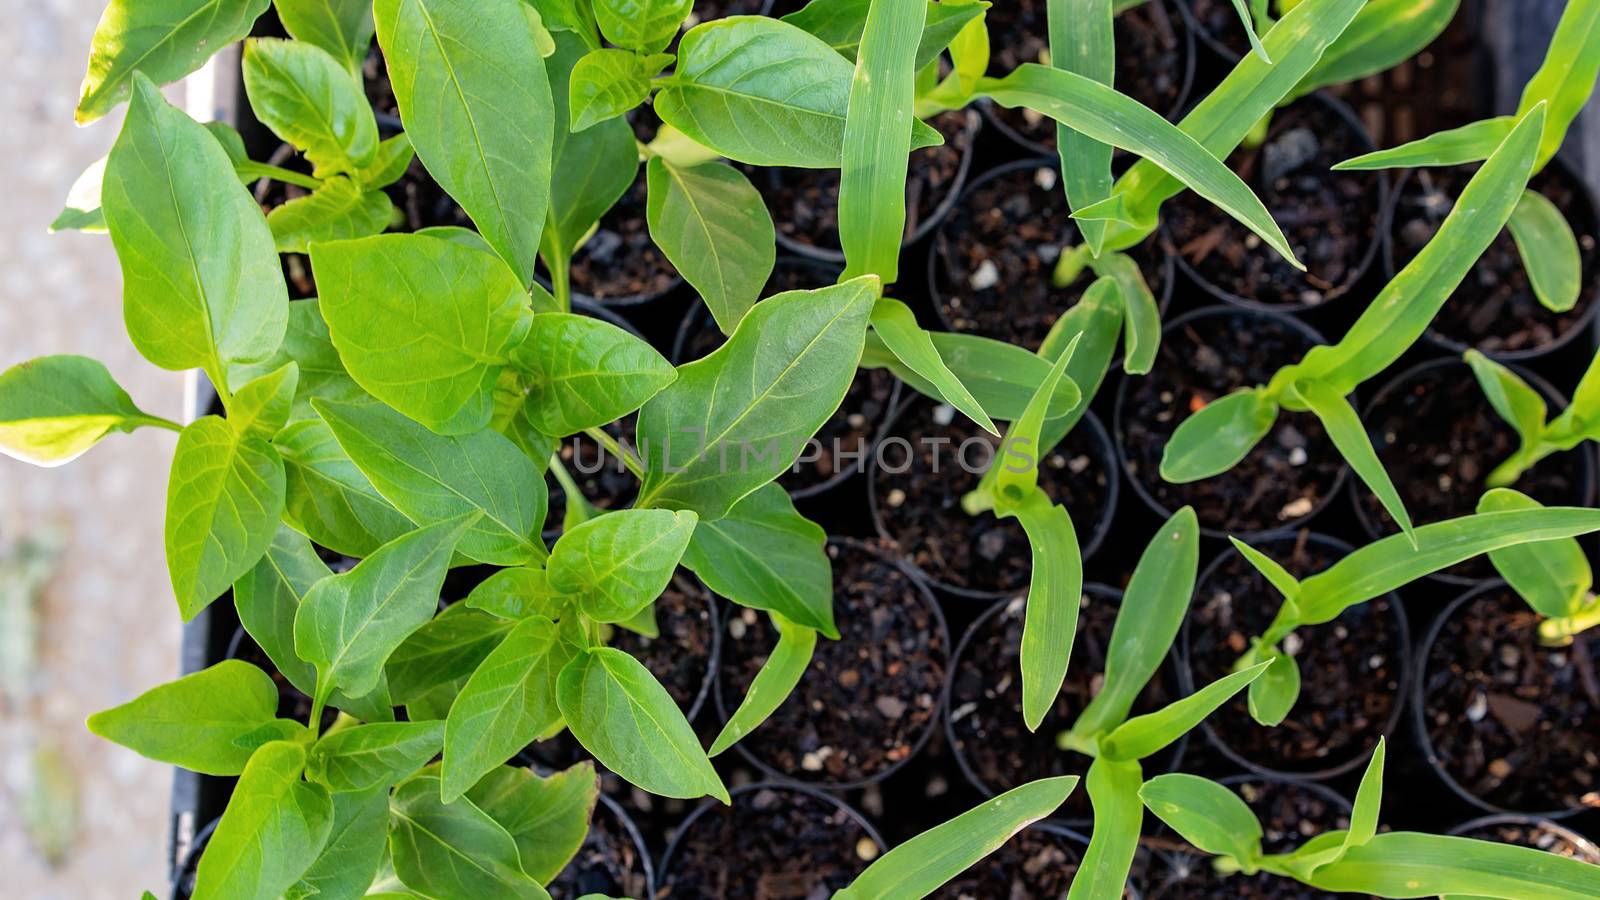 Herb Seedling Plants For Sale At Market by 	JacksonStock